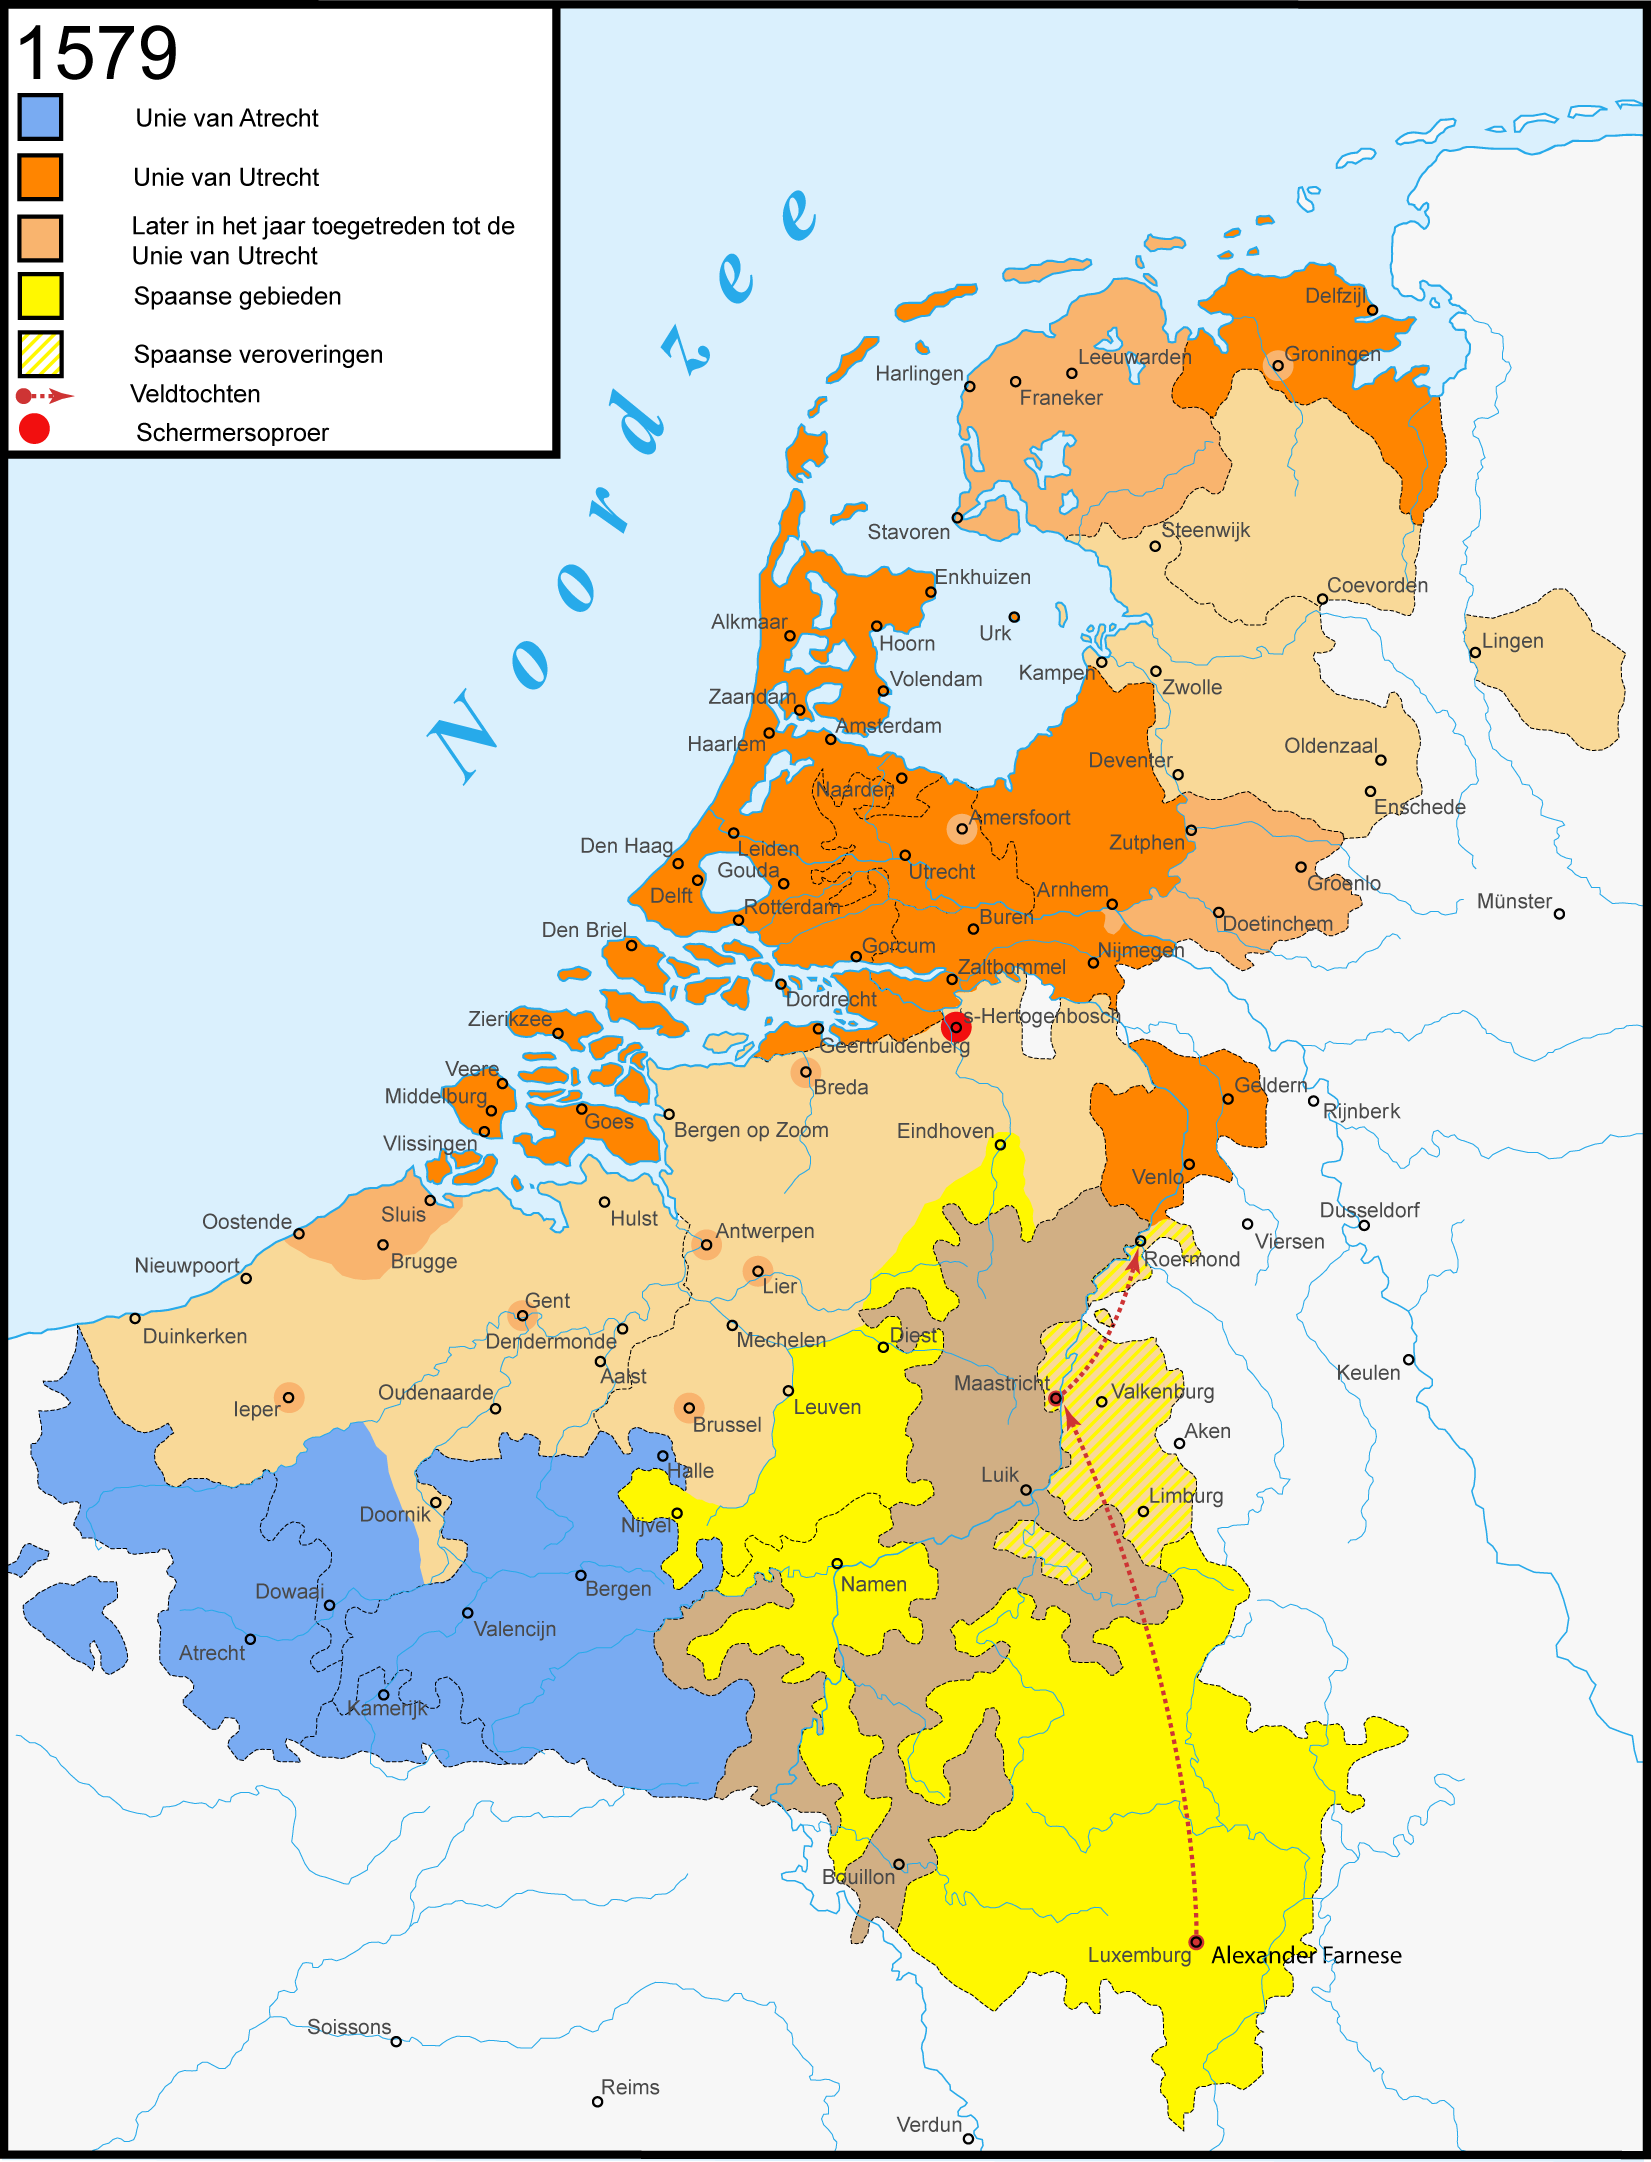 Unions of Utrecht and Arras